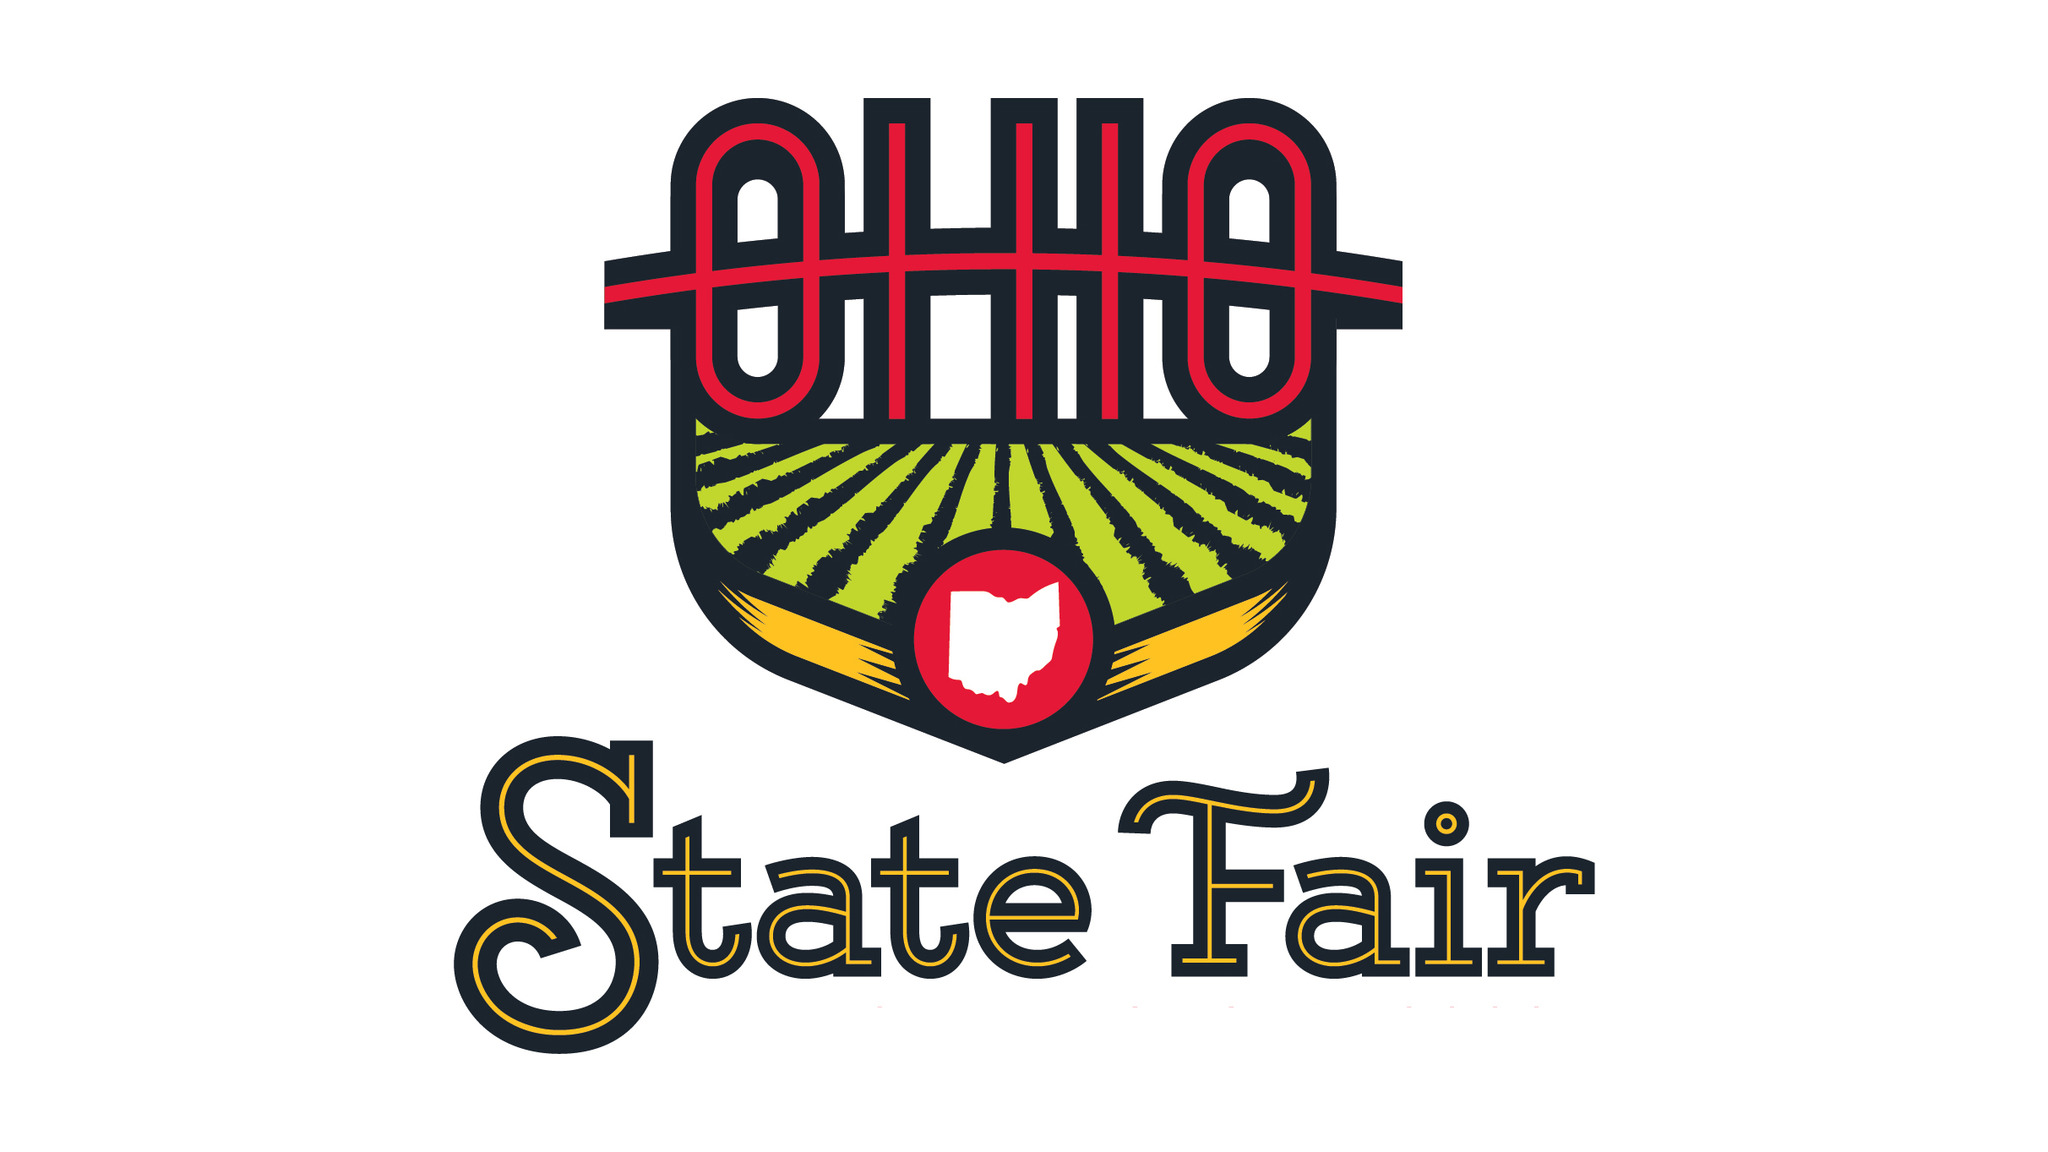 Ohio State Fair Tickets Event Dates & Schedule